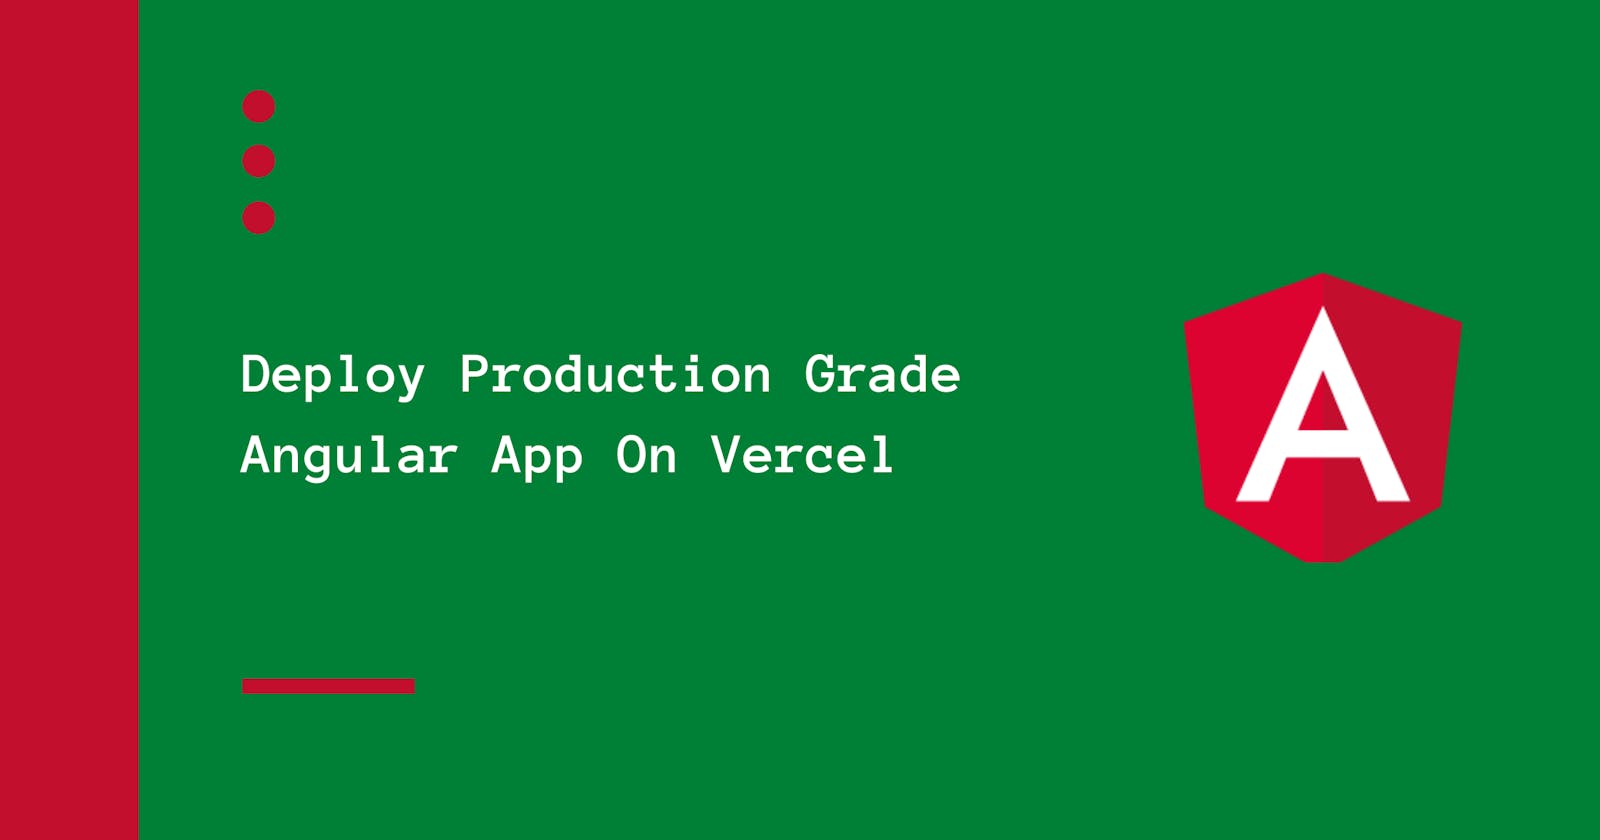 Deploy Production Grade
Angular App On Vercel